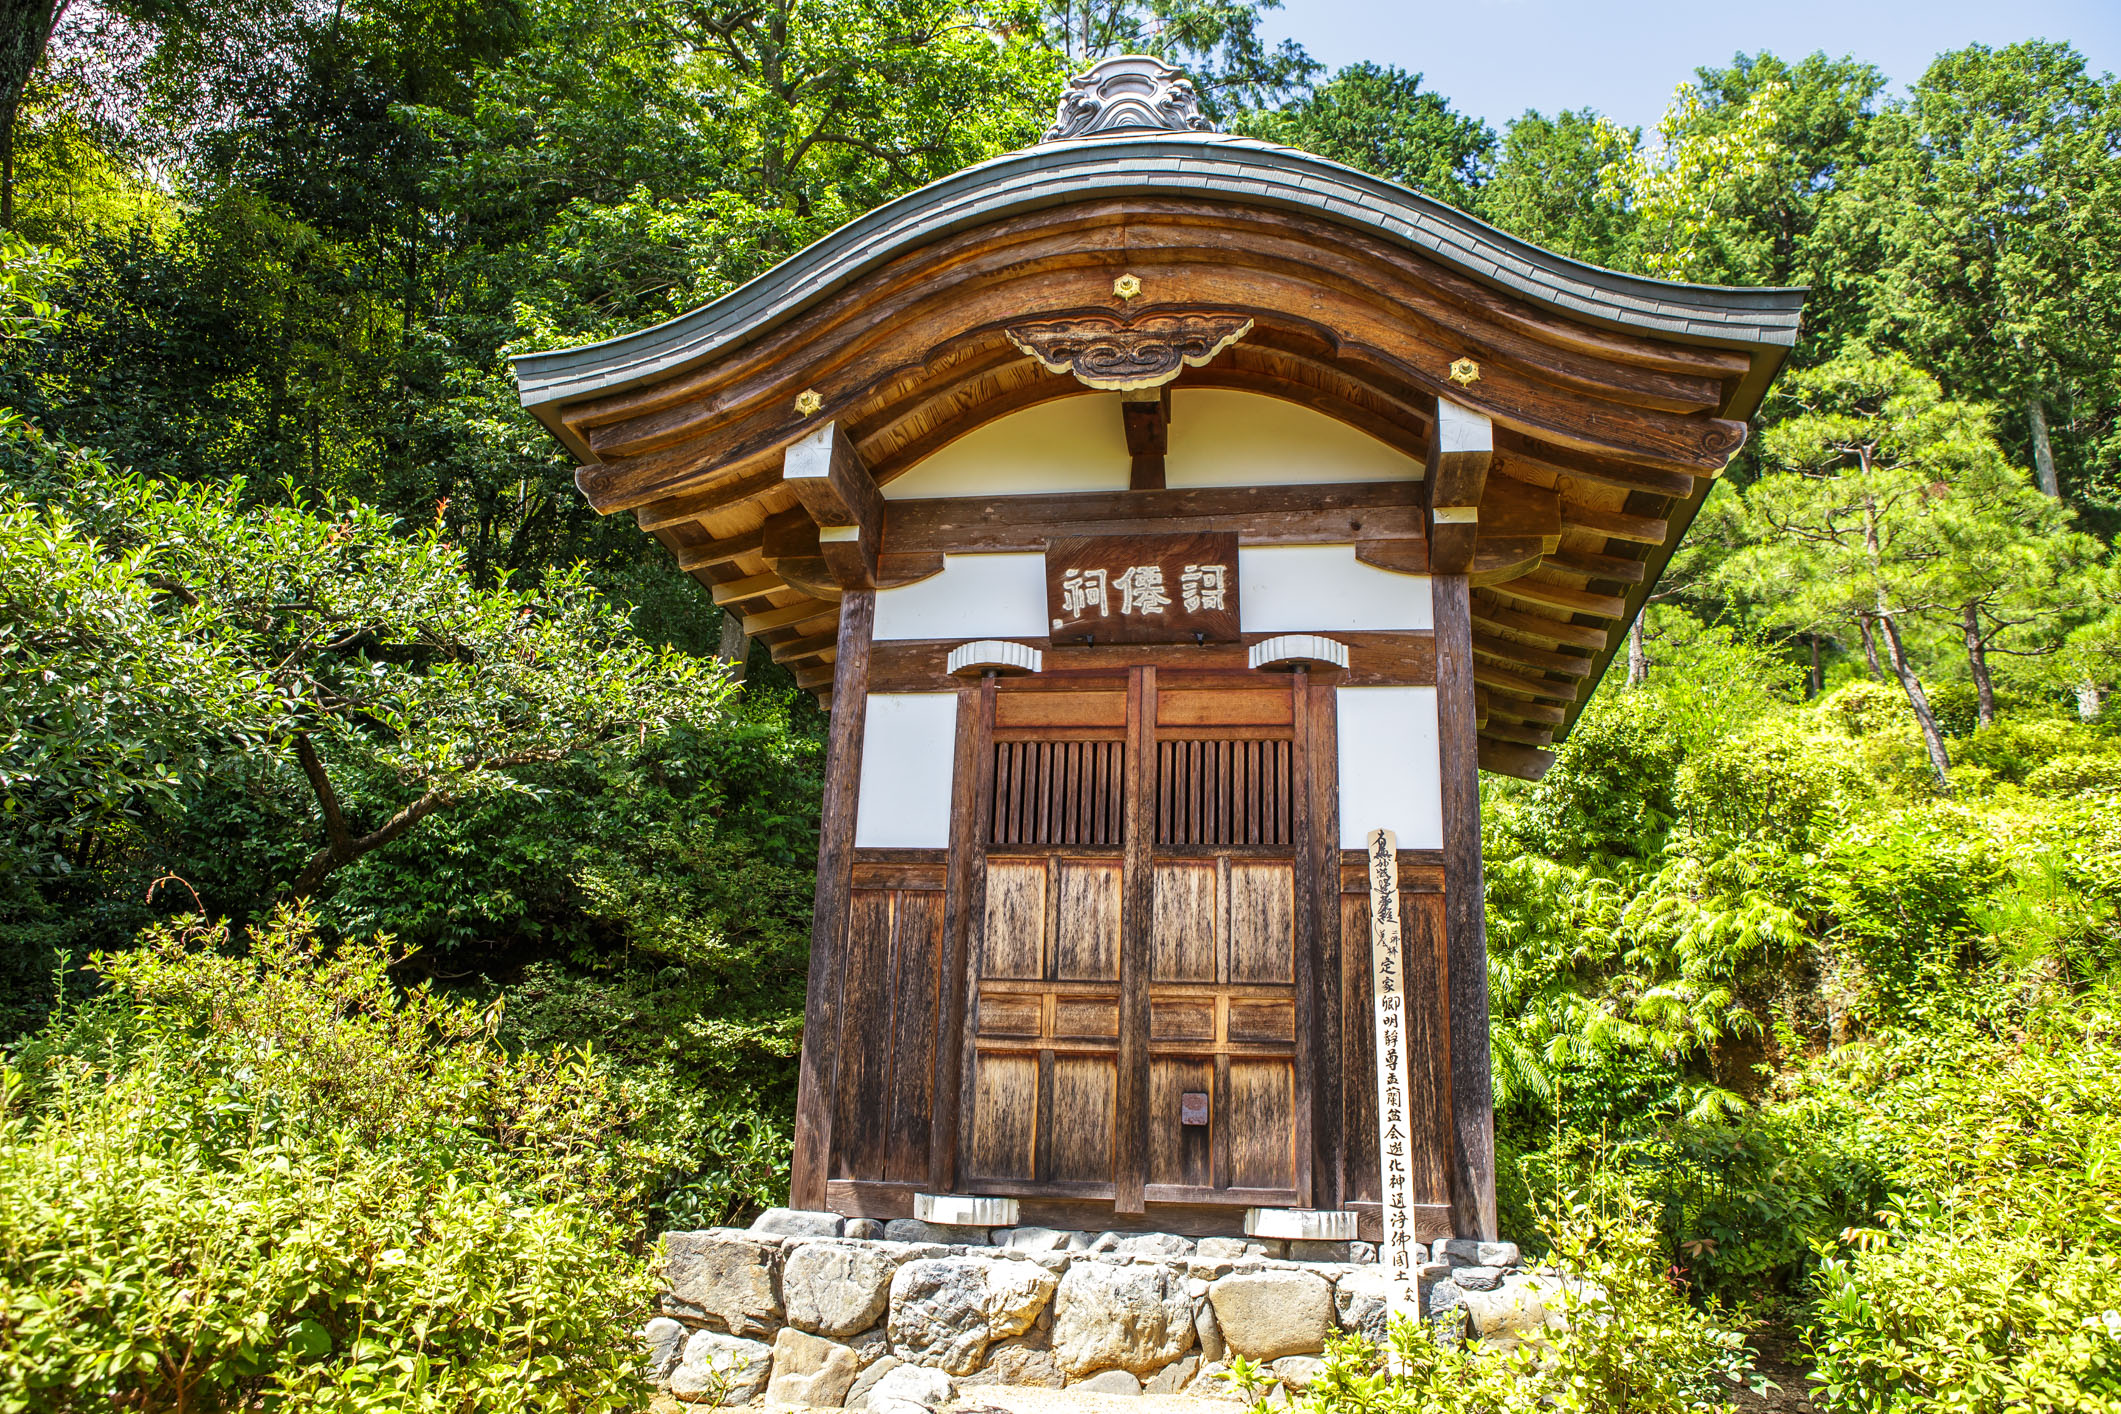 /Guewen/galeries/public/Voyages/Japon/kyoto/temples/Kyoto-temple_028.jpg